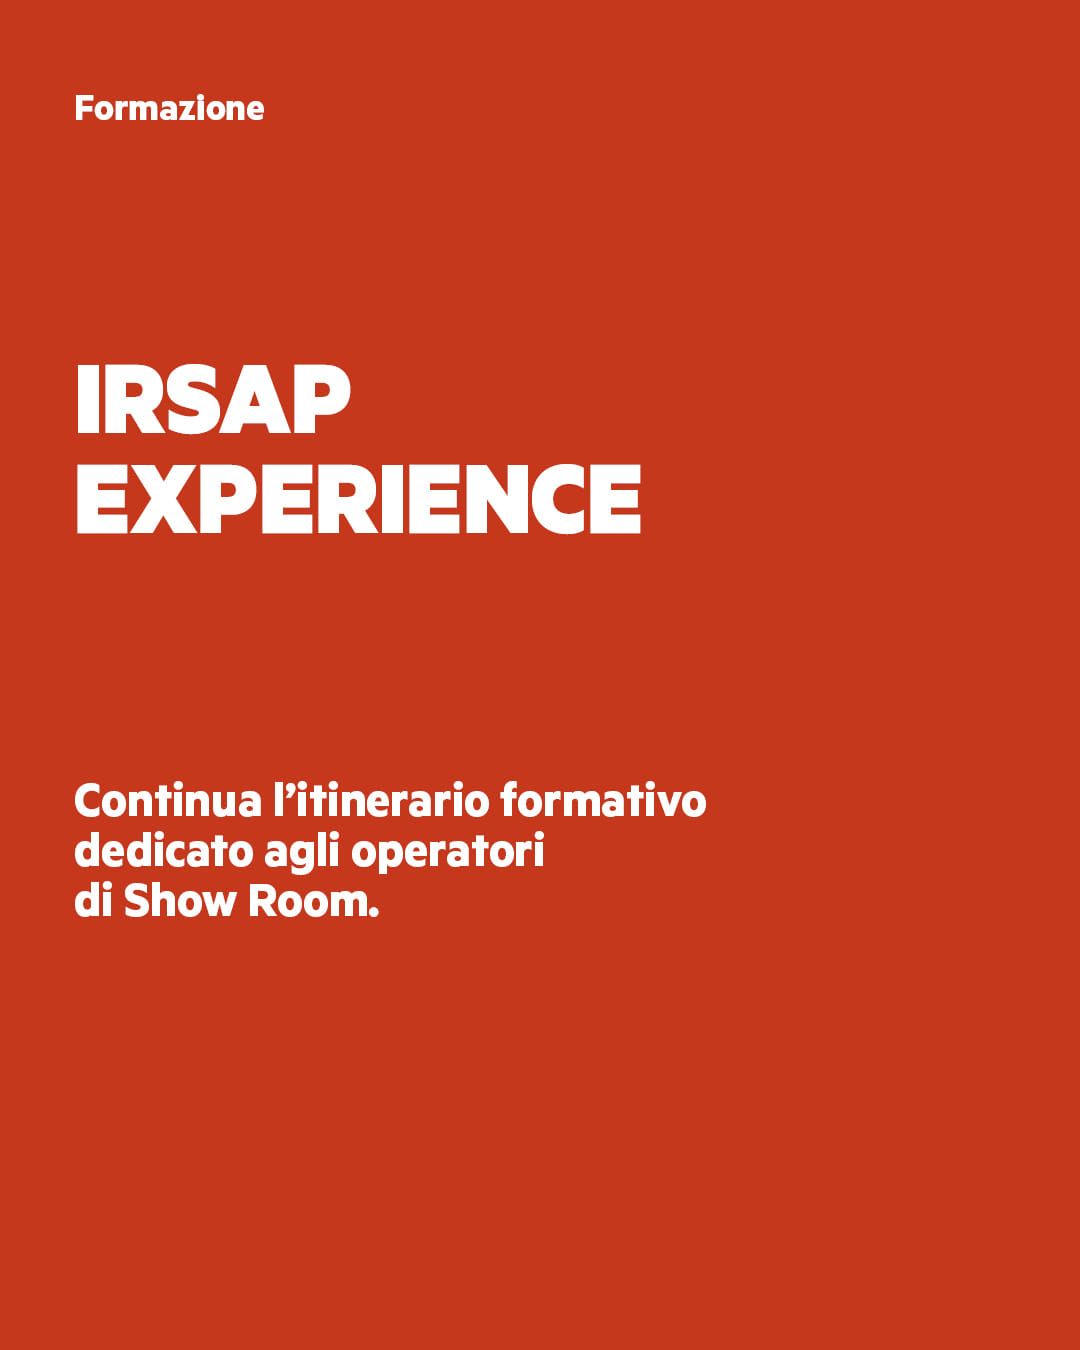 IRSAP EXPERIENCE - Showroom operators